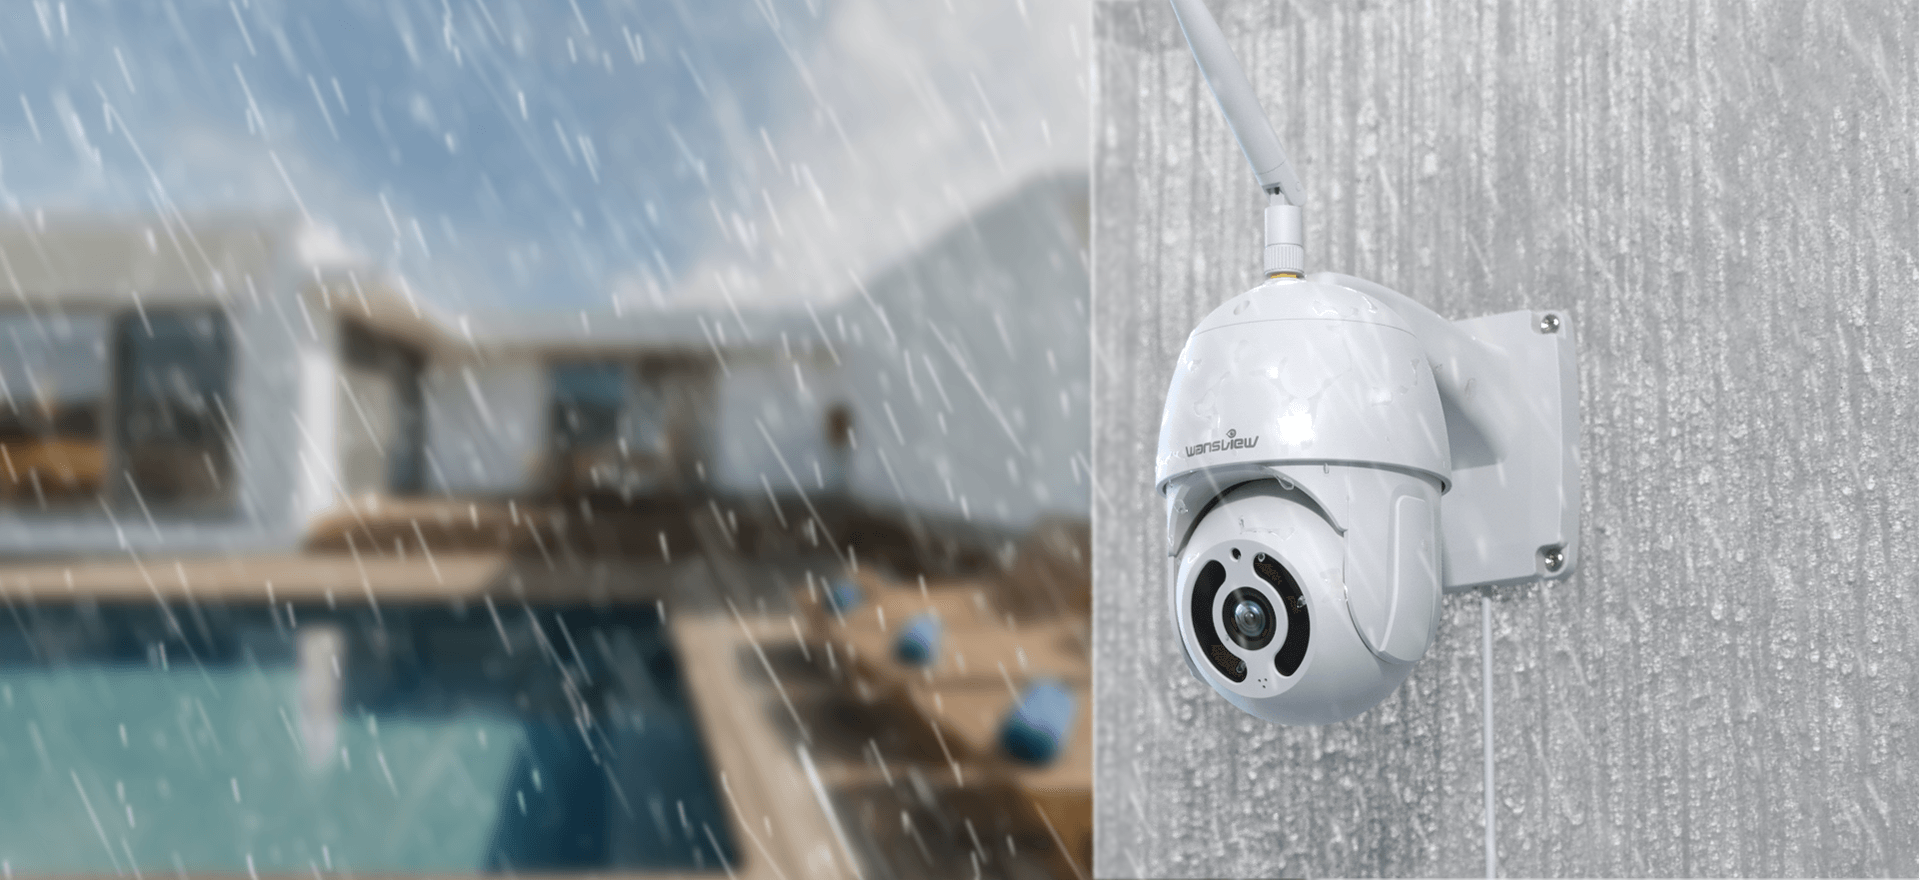 wansview Security Camera Outdoor, 1080P Pan-Tilt 360° Surveillance  Waterproof WiFi Camera, Night Vision, 2-Way Audio, Smart Siren, SD Card